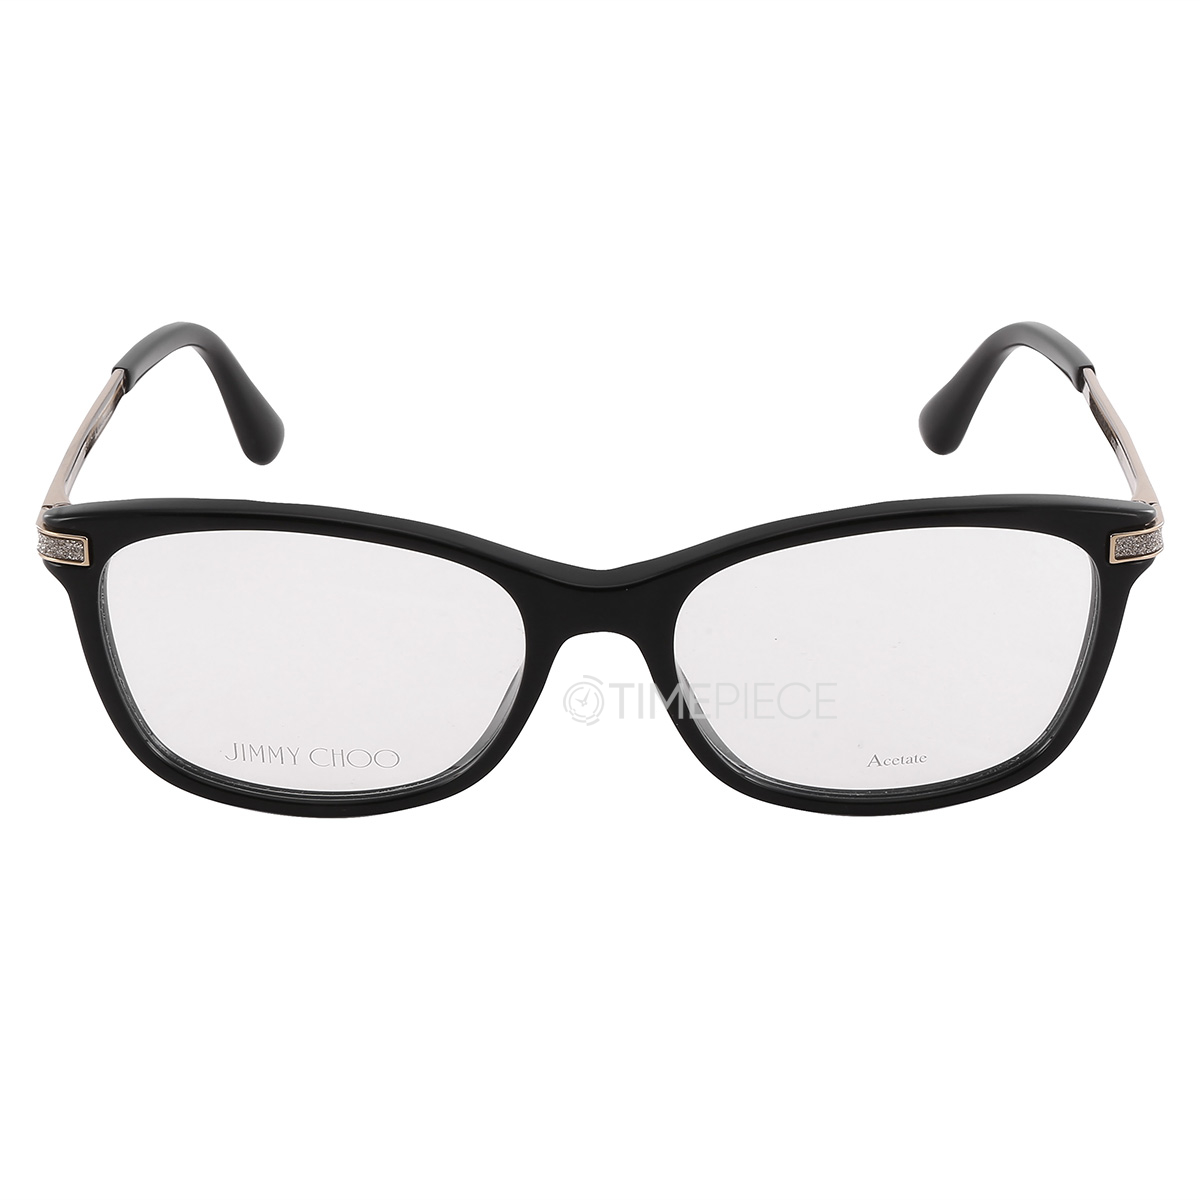 Jimmy Choo Ladies Black Rectangular Eyeglass Frames JC26908070052